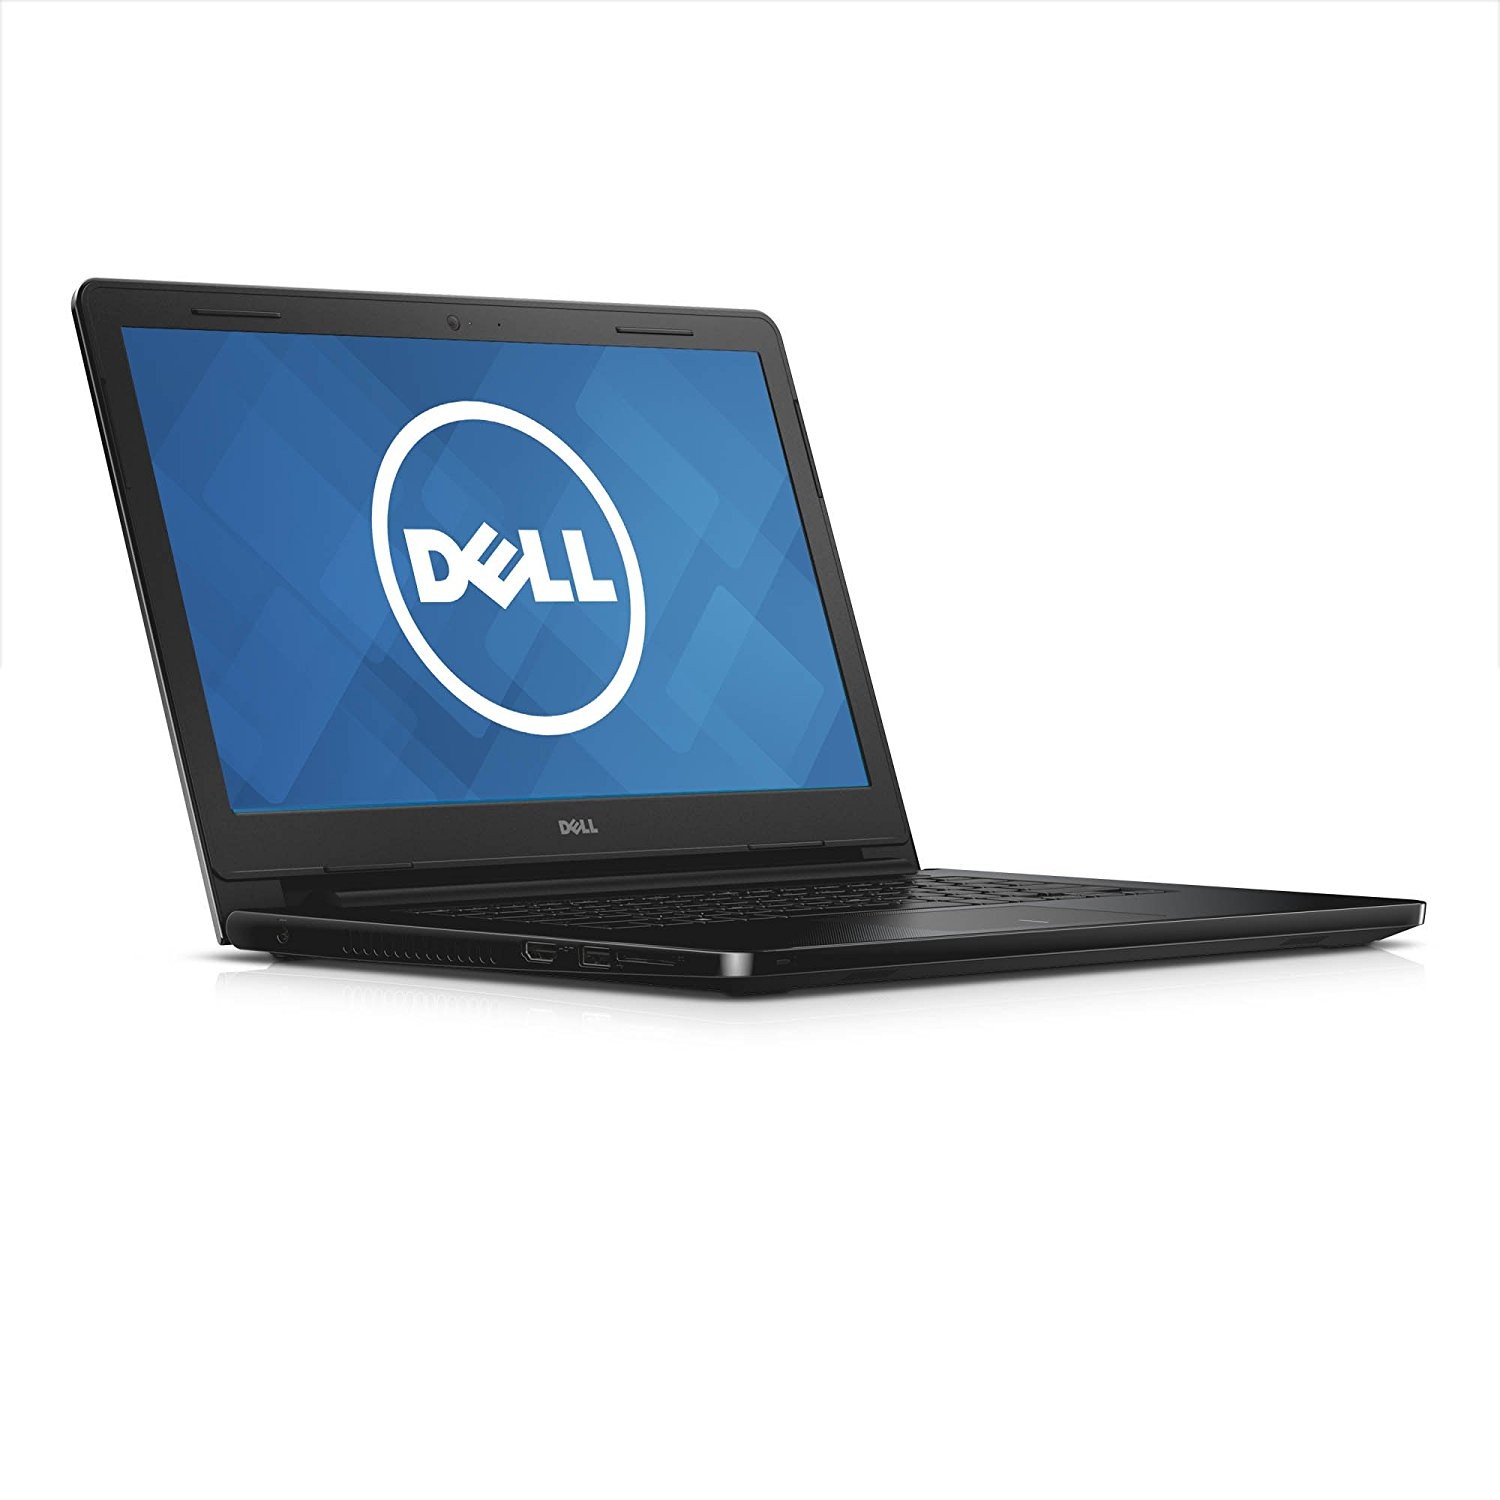 DEL-3558-i3-Dell Inspiron 3558 Refurbished Laptop 4 GB RAM 500 GB HDD Core i3 15.6-inch Windows 10 Pro-image